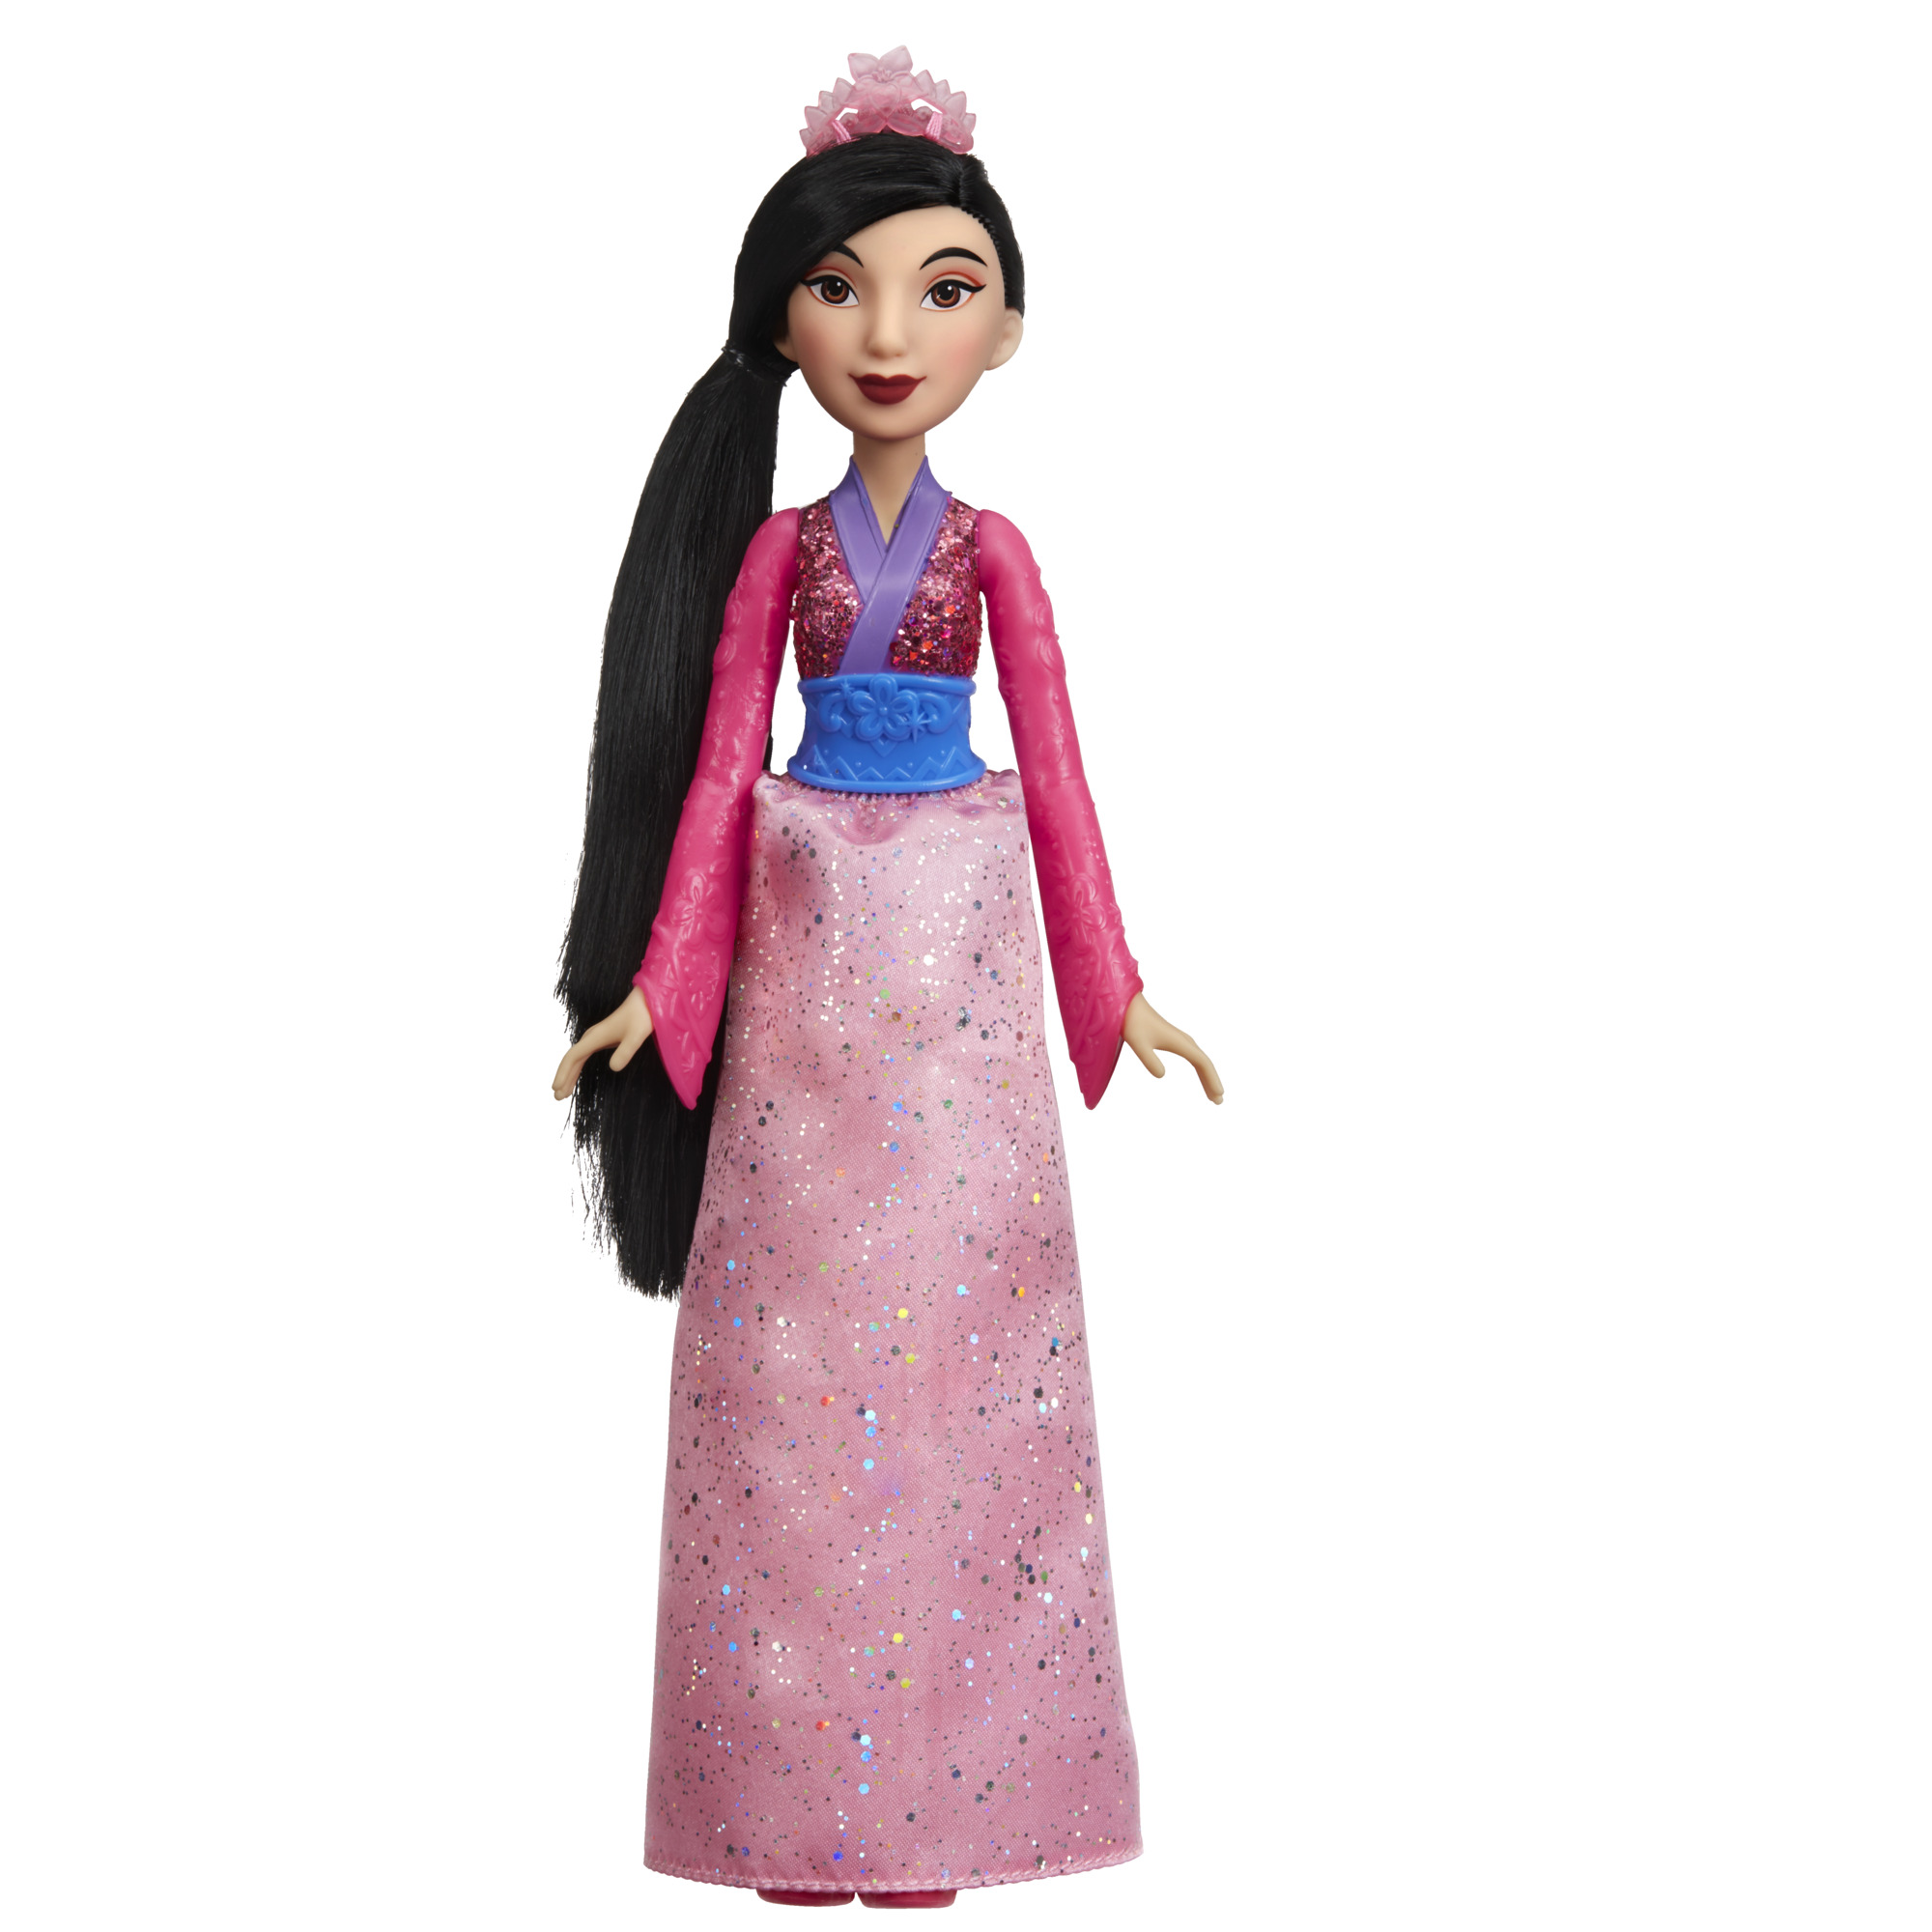 Disney Princess Royal Shimmer Mulan, with Sparkly Skirt, Tiara, Shoes, Ages 3+ - image 1 of 8